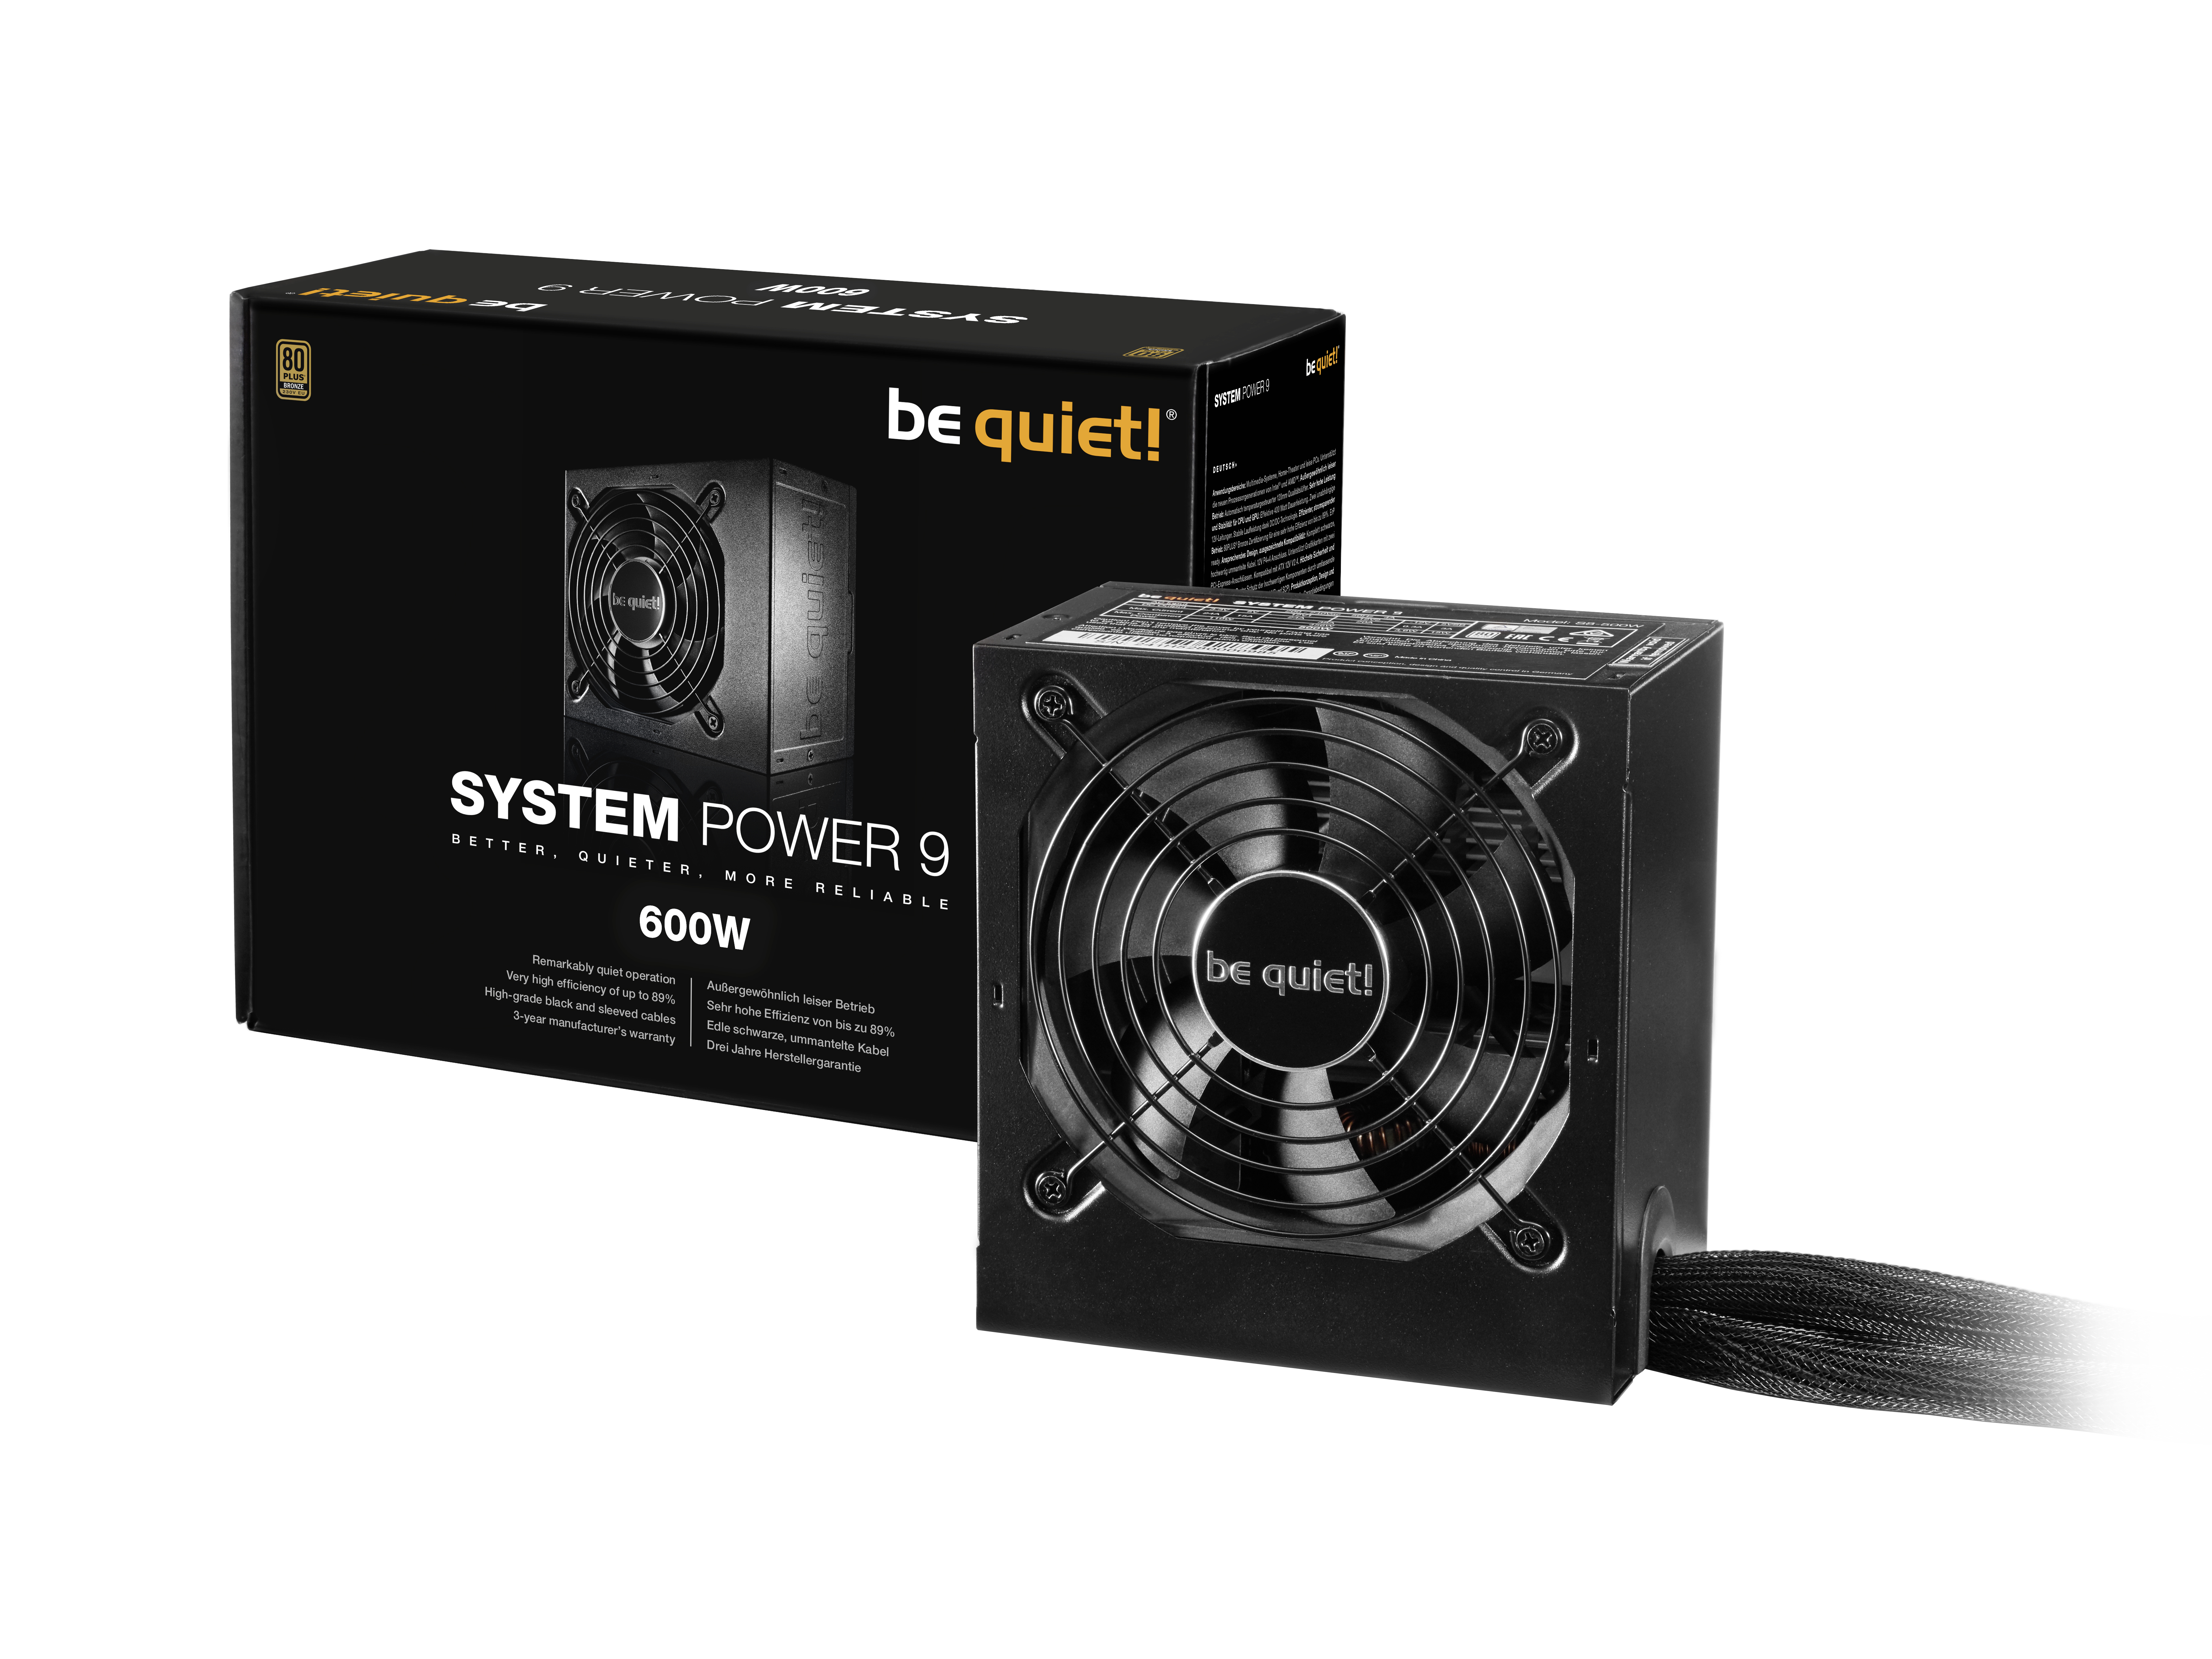 80+ Bronze Cont Semi-Modular Power Dual 12V 600W System Power 9 PSU Sleeve Bearing Be Quiet